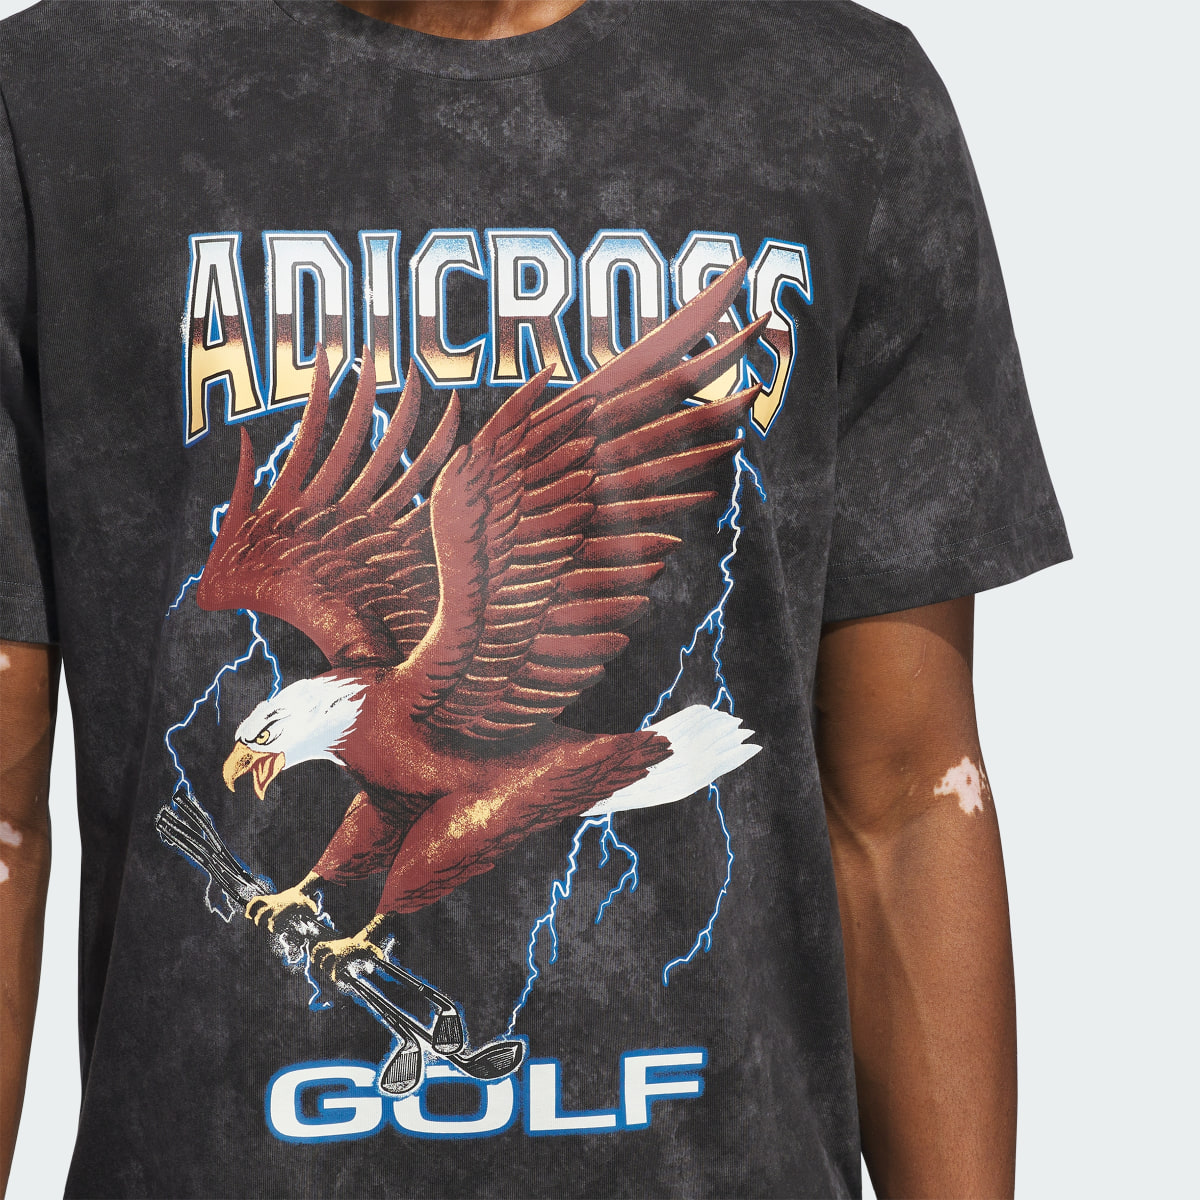 Adidas Koszulka Adicross Eagle Graphic. 6